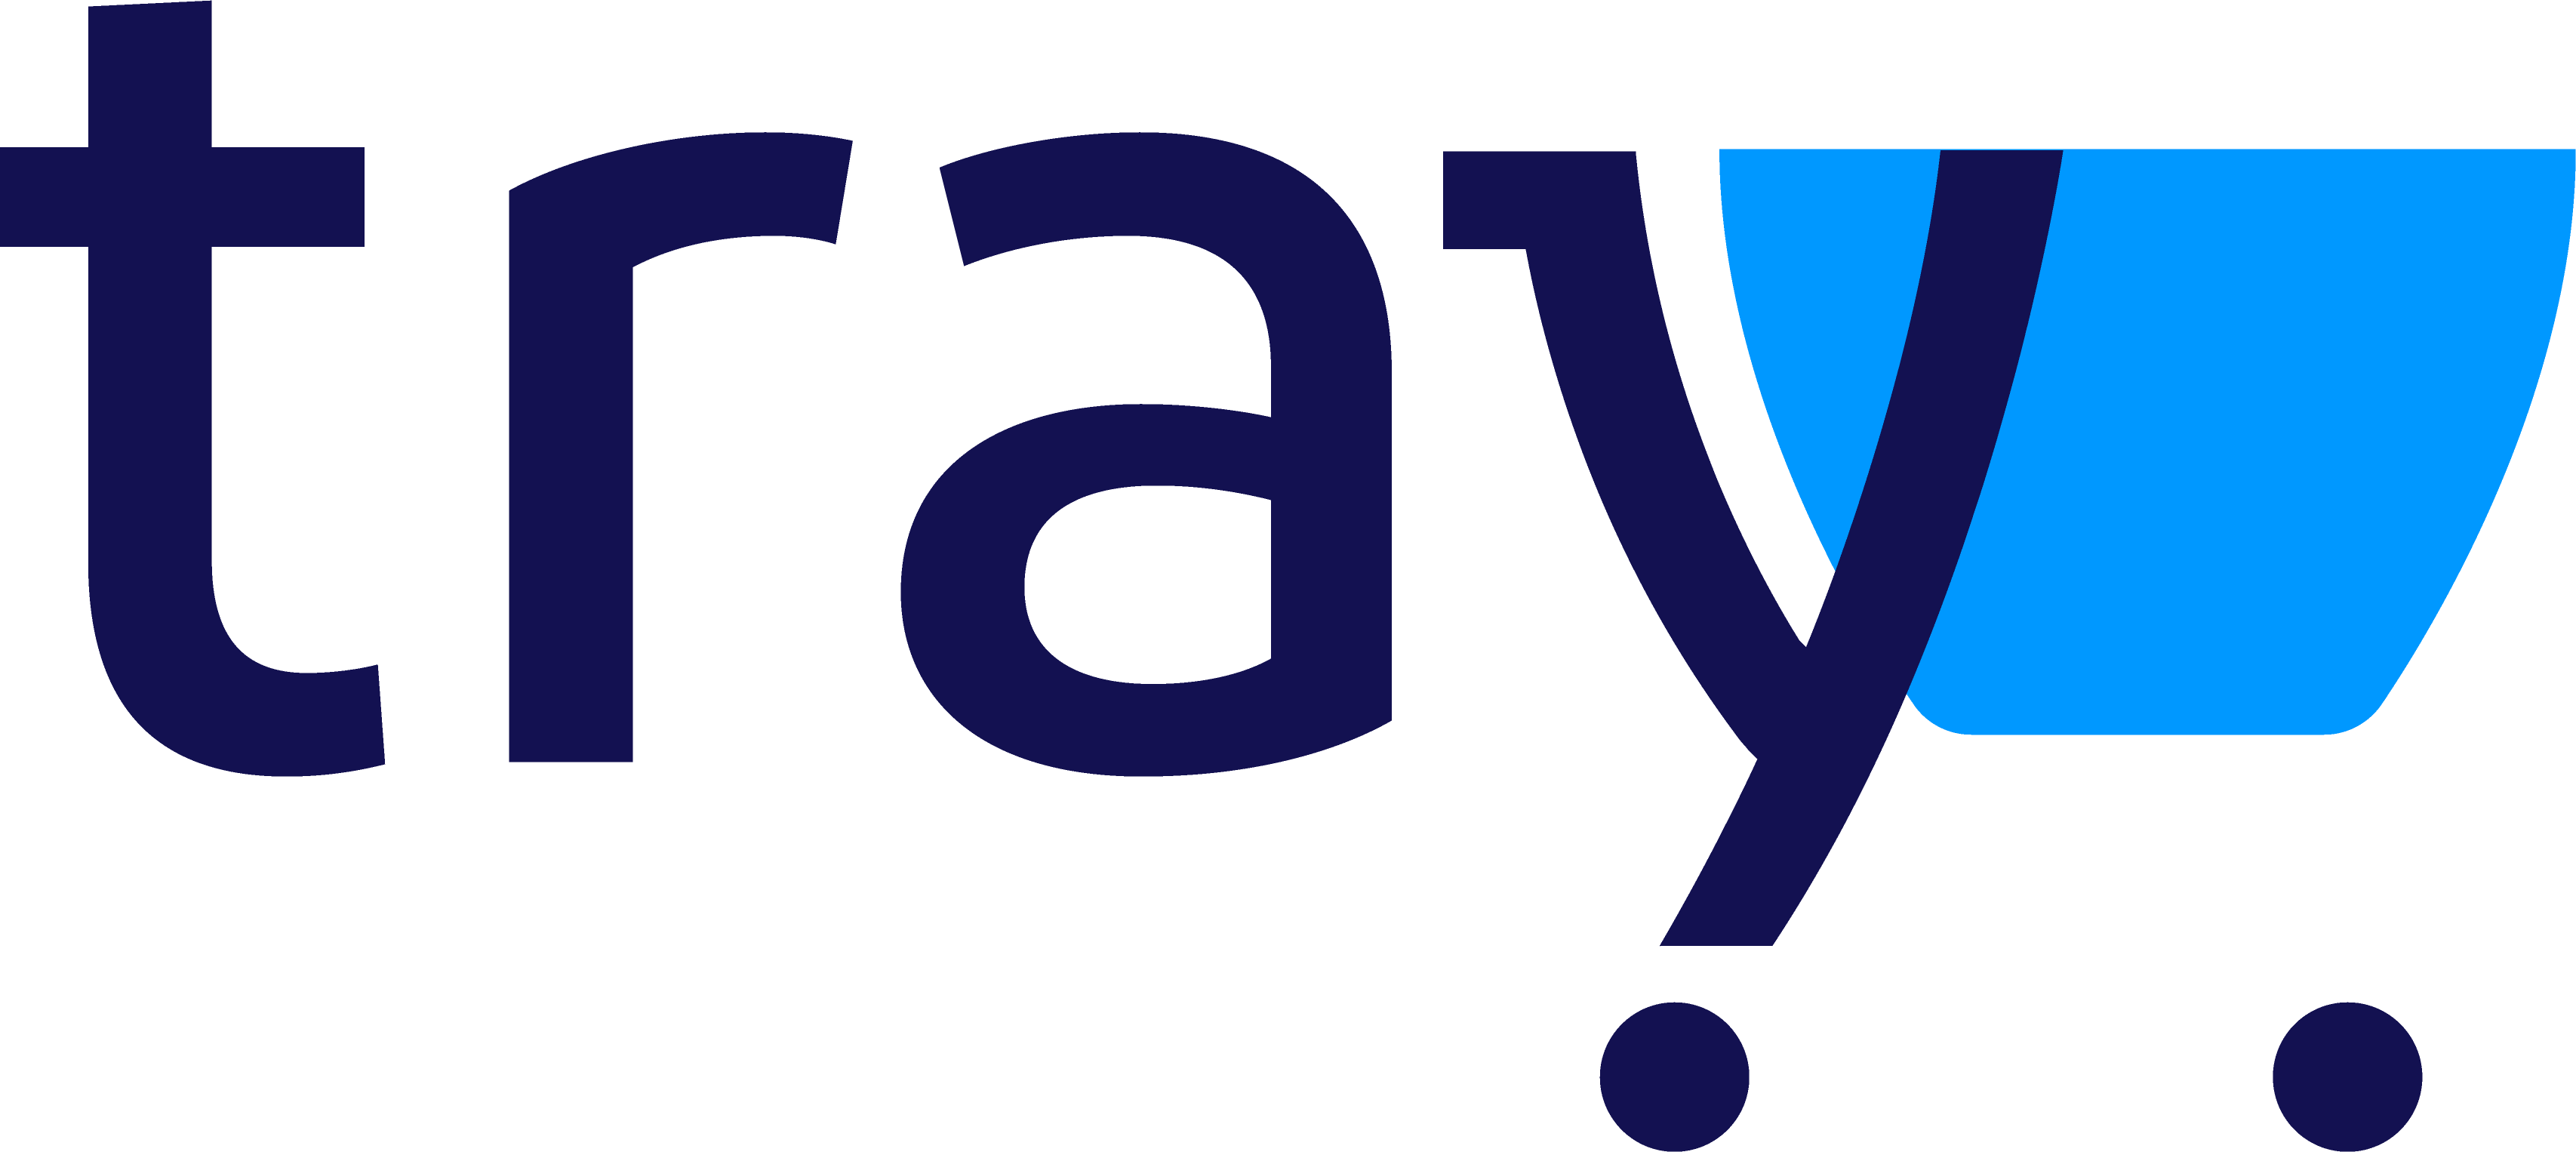 Logo de plataforma de ecommerce Tray